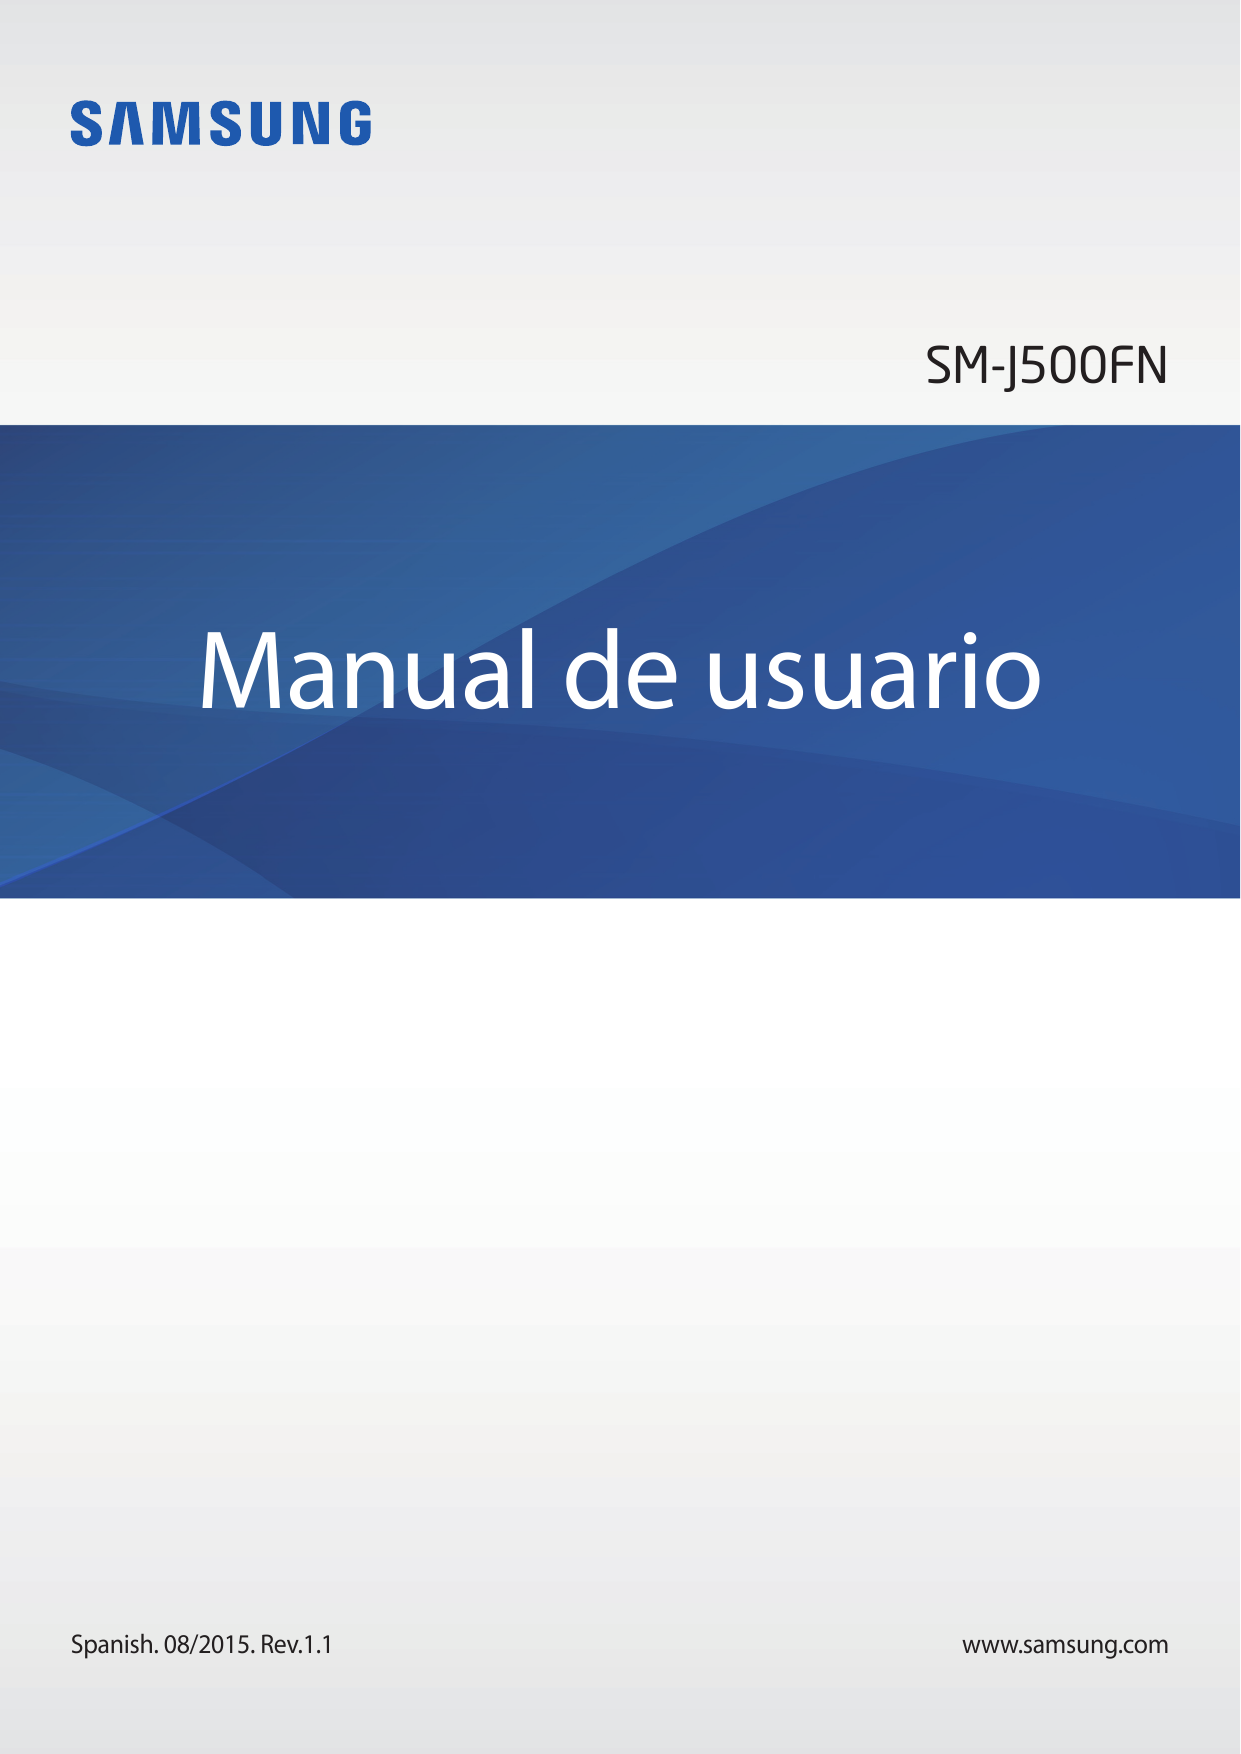 SM-J500FNManual de usuarioSpanish. 08/2015. Rev.1.1www.samsung.com